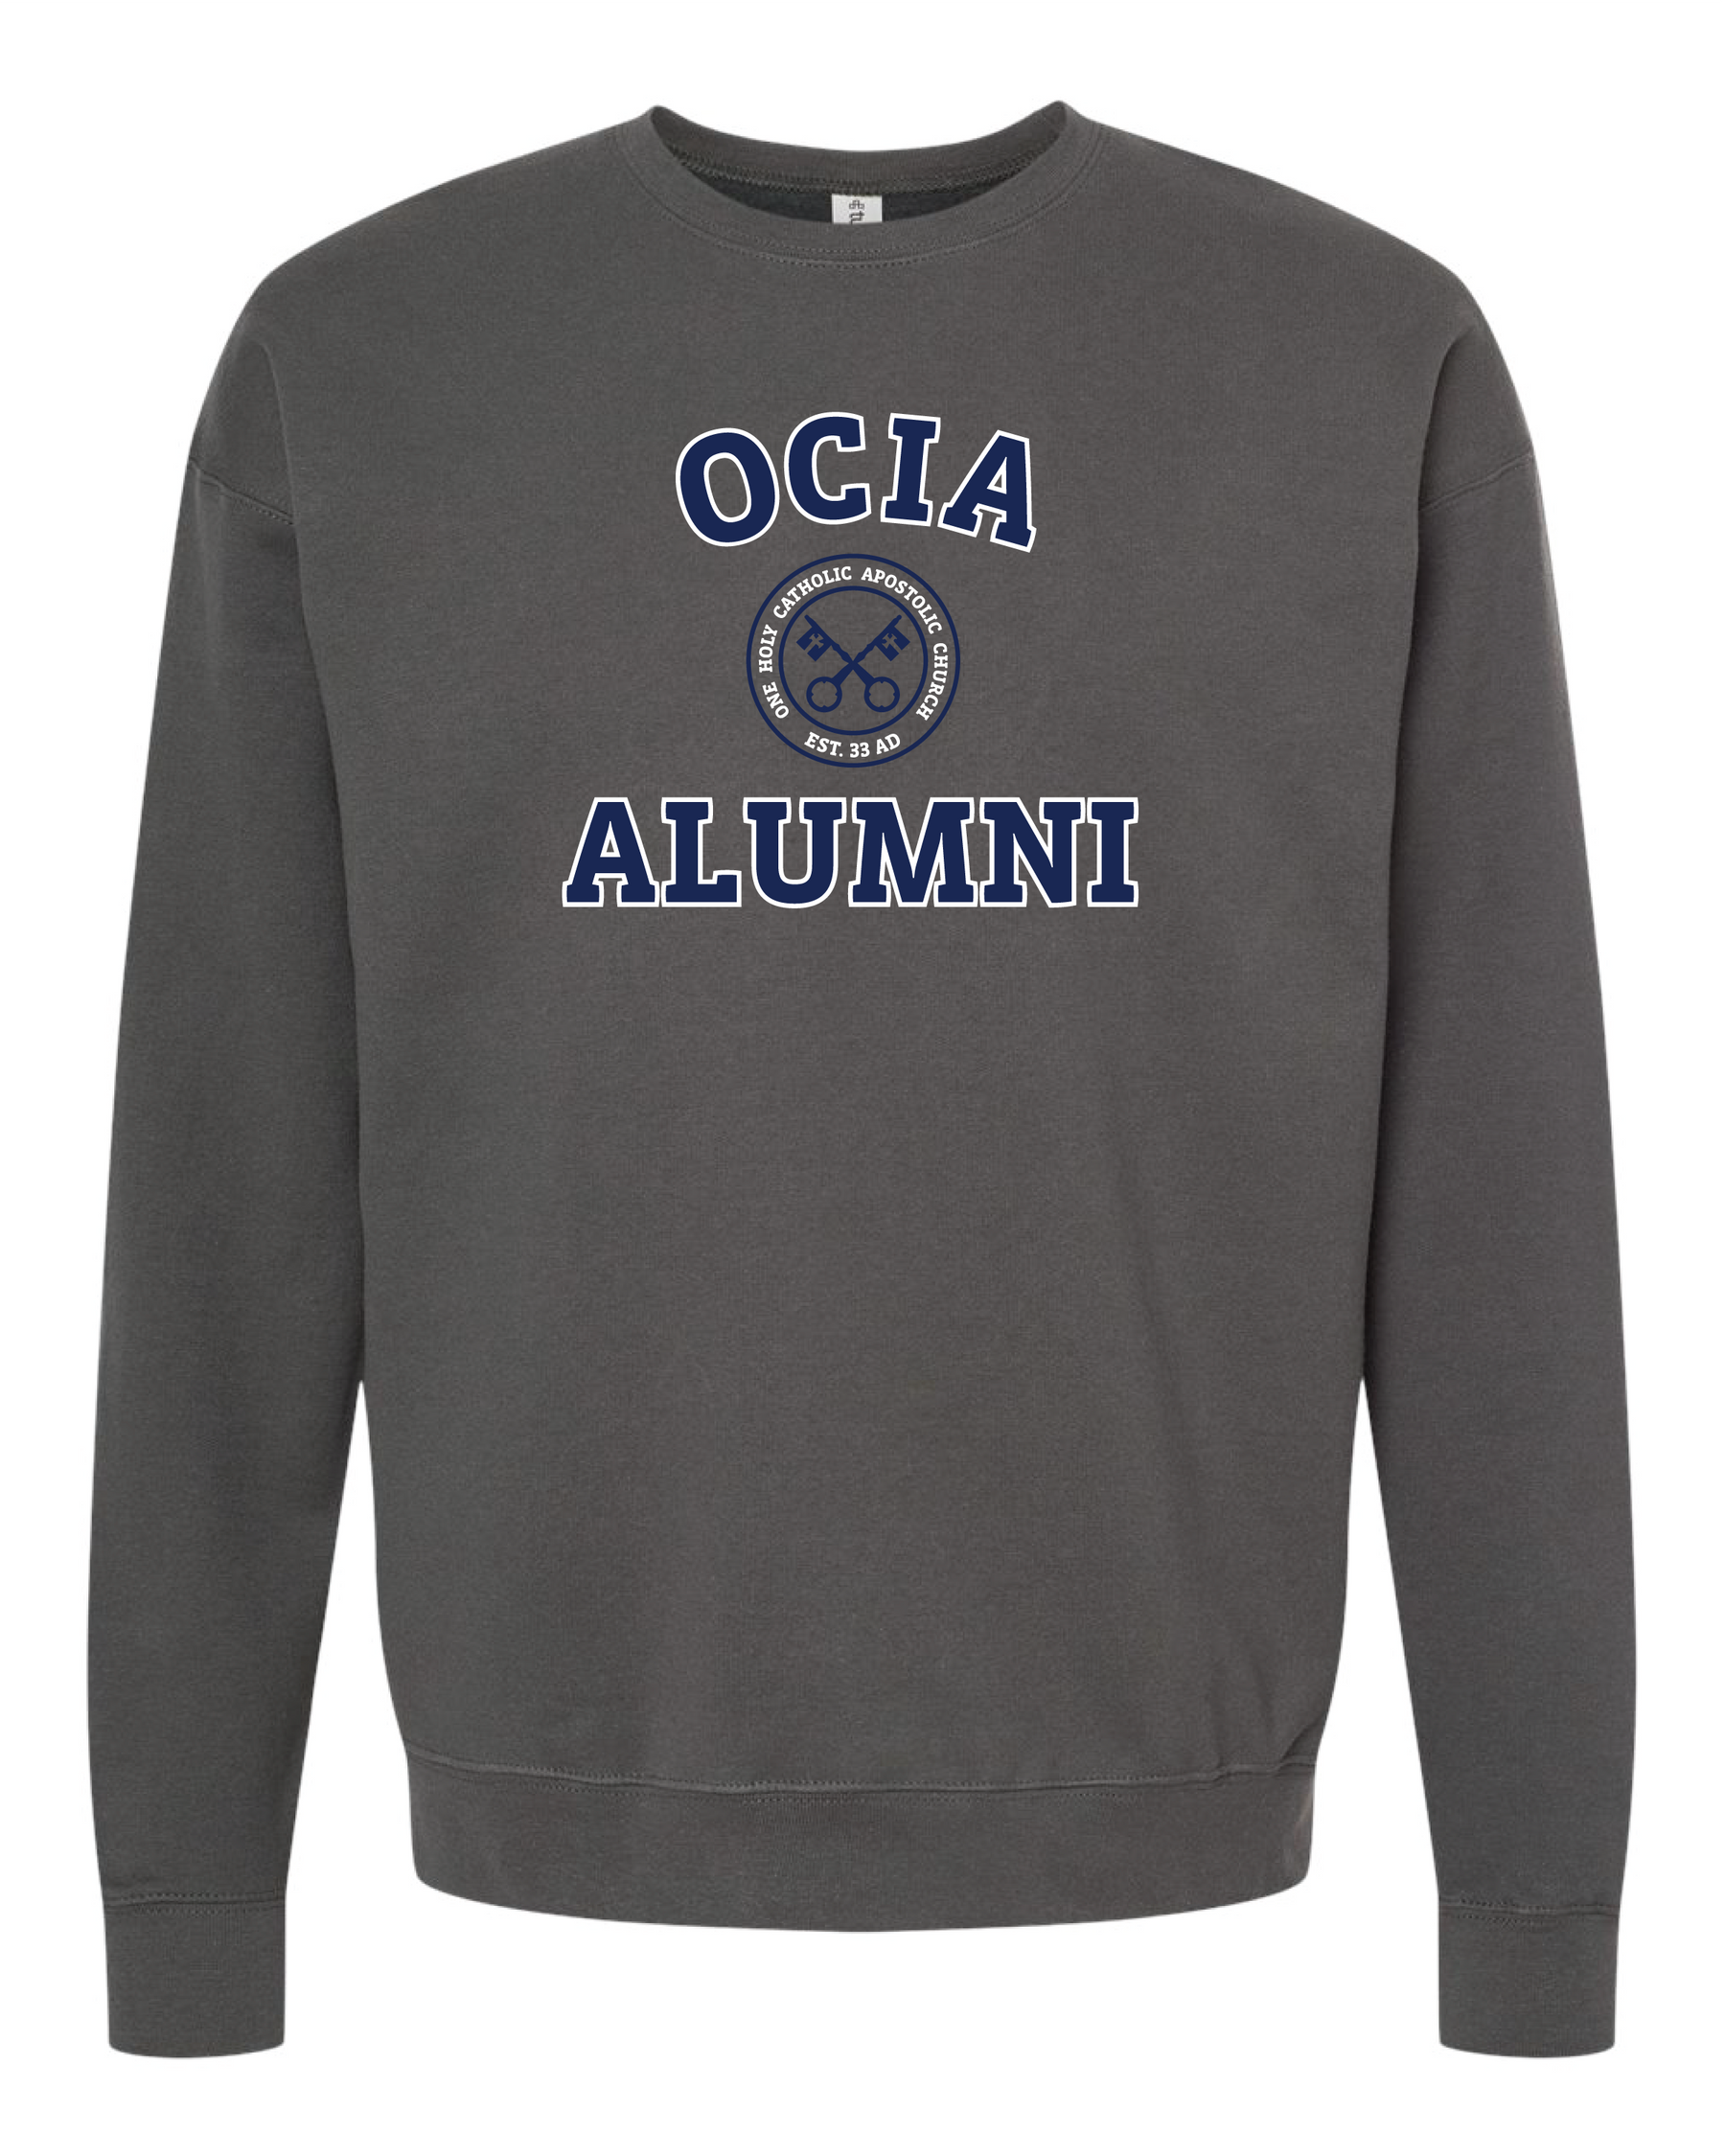 OCIA Alumni Sweatshirt (Crewneck)